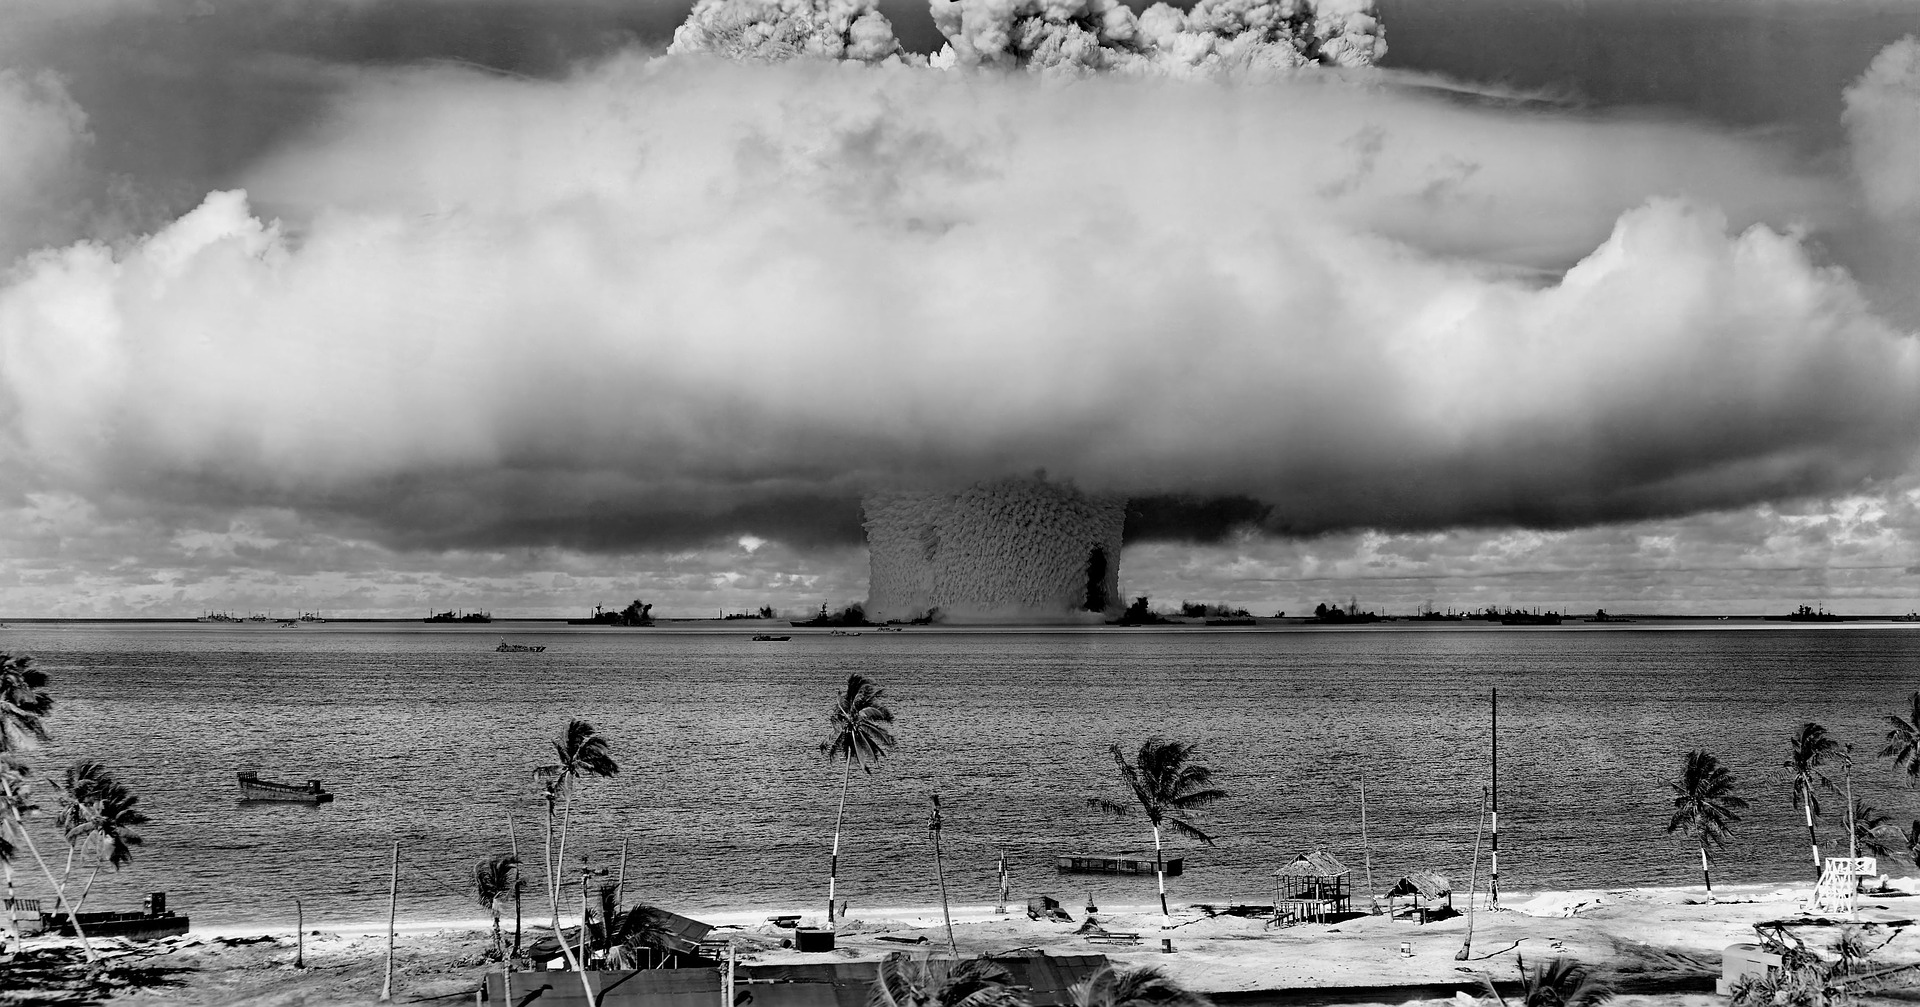 Surviving Nuclear Explosion